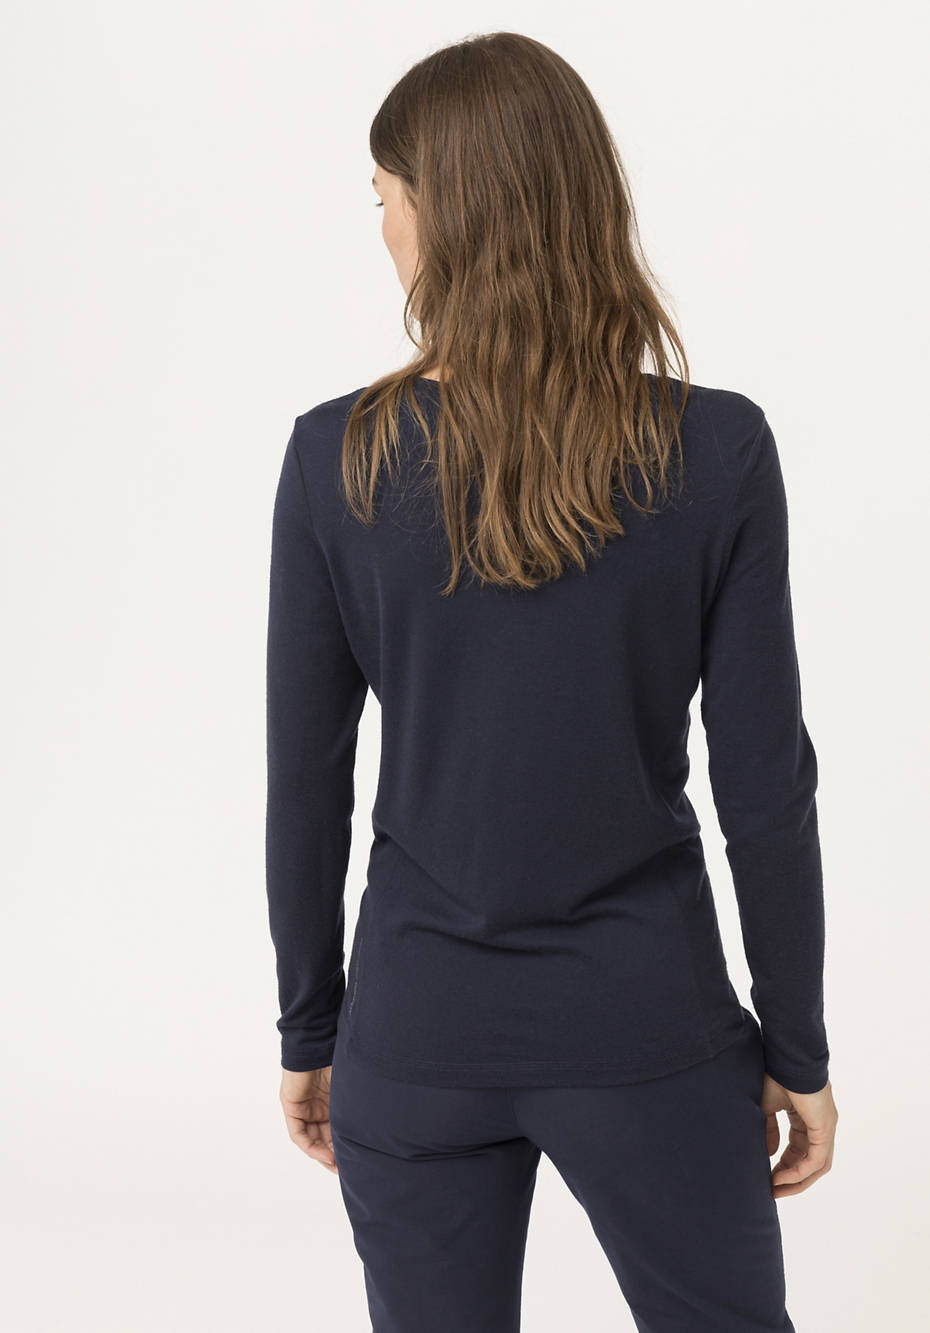 Long-sleeved shirt made from pure organic merino wool